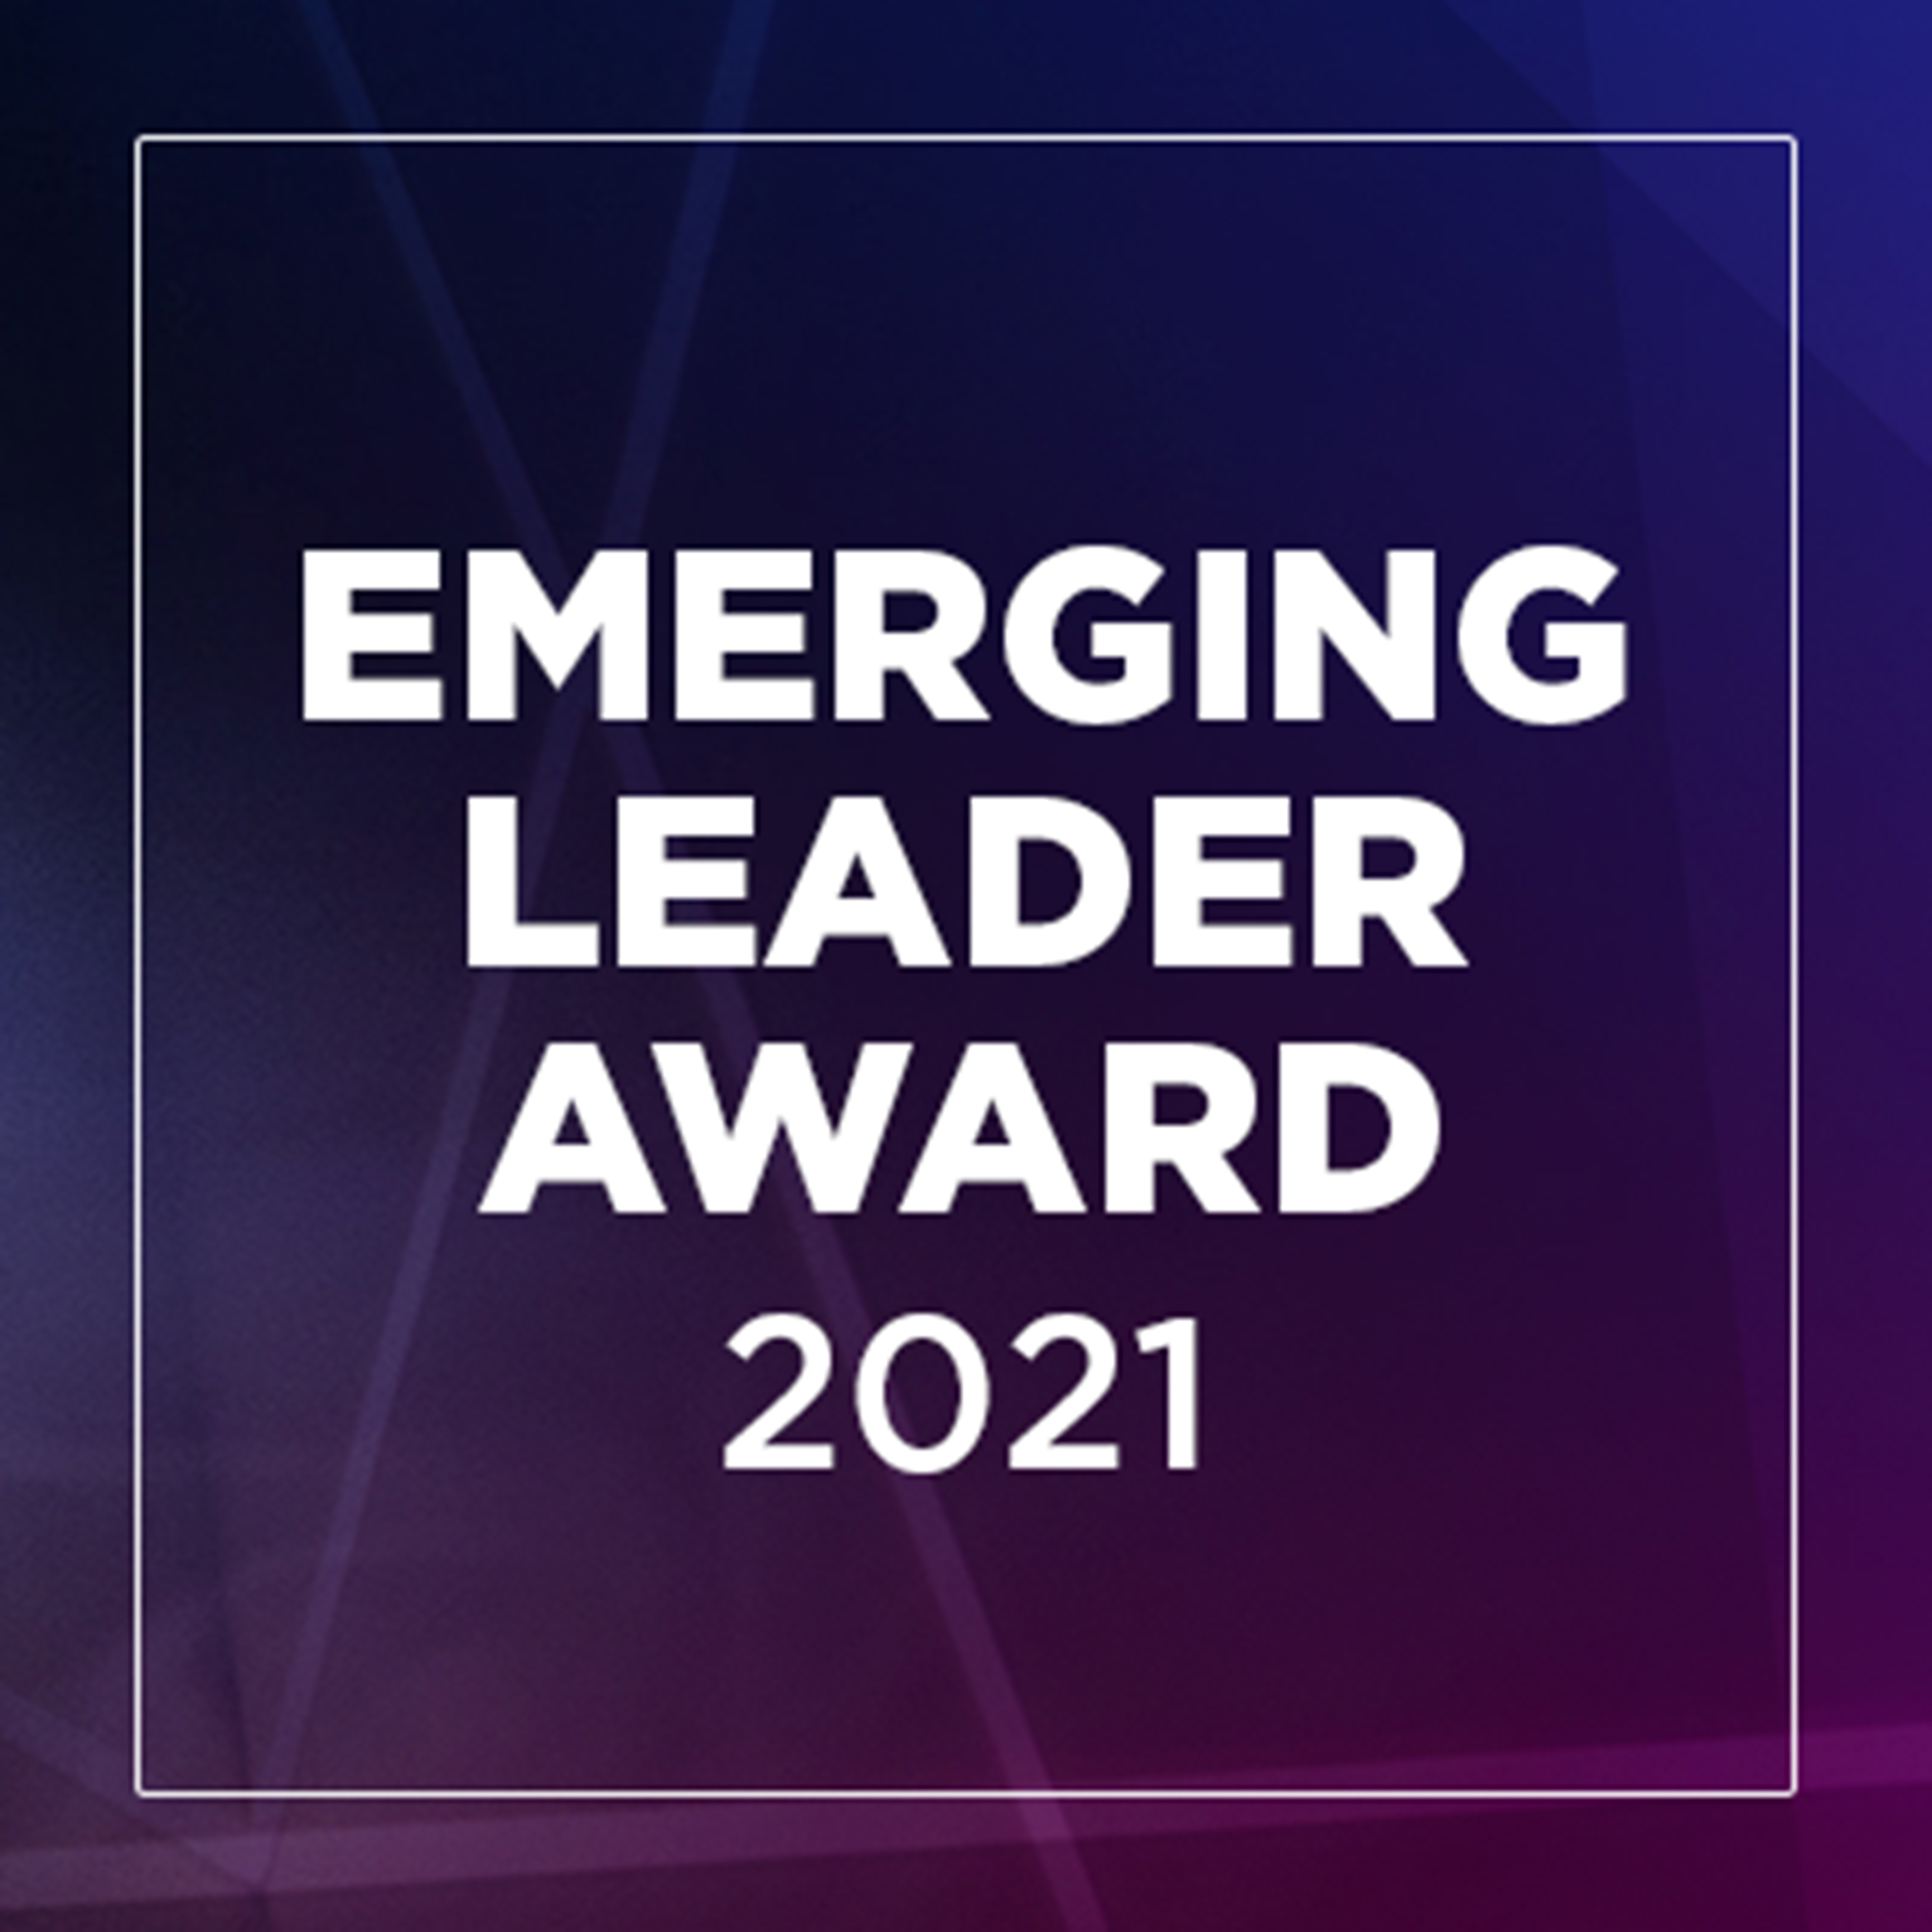 Emerging Leader Award 2021